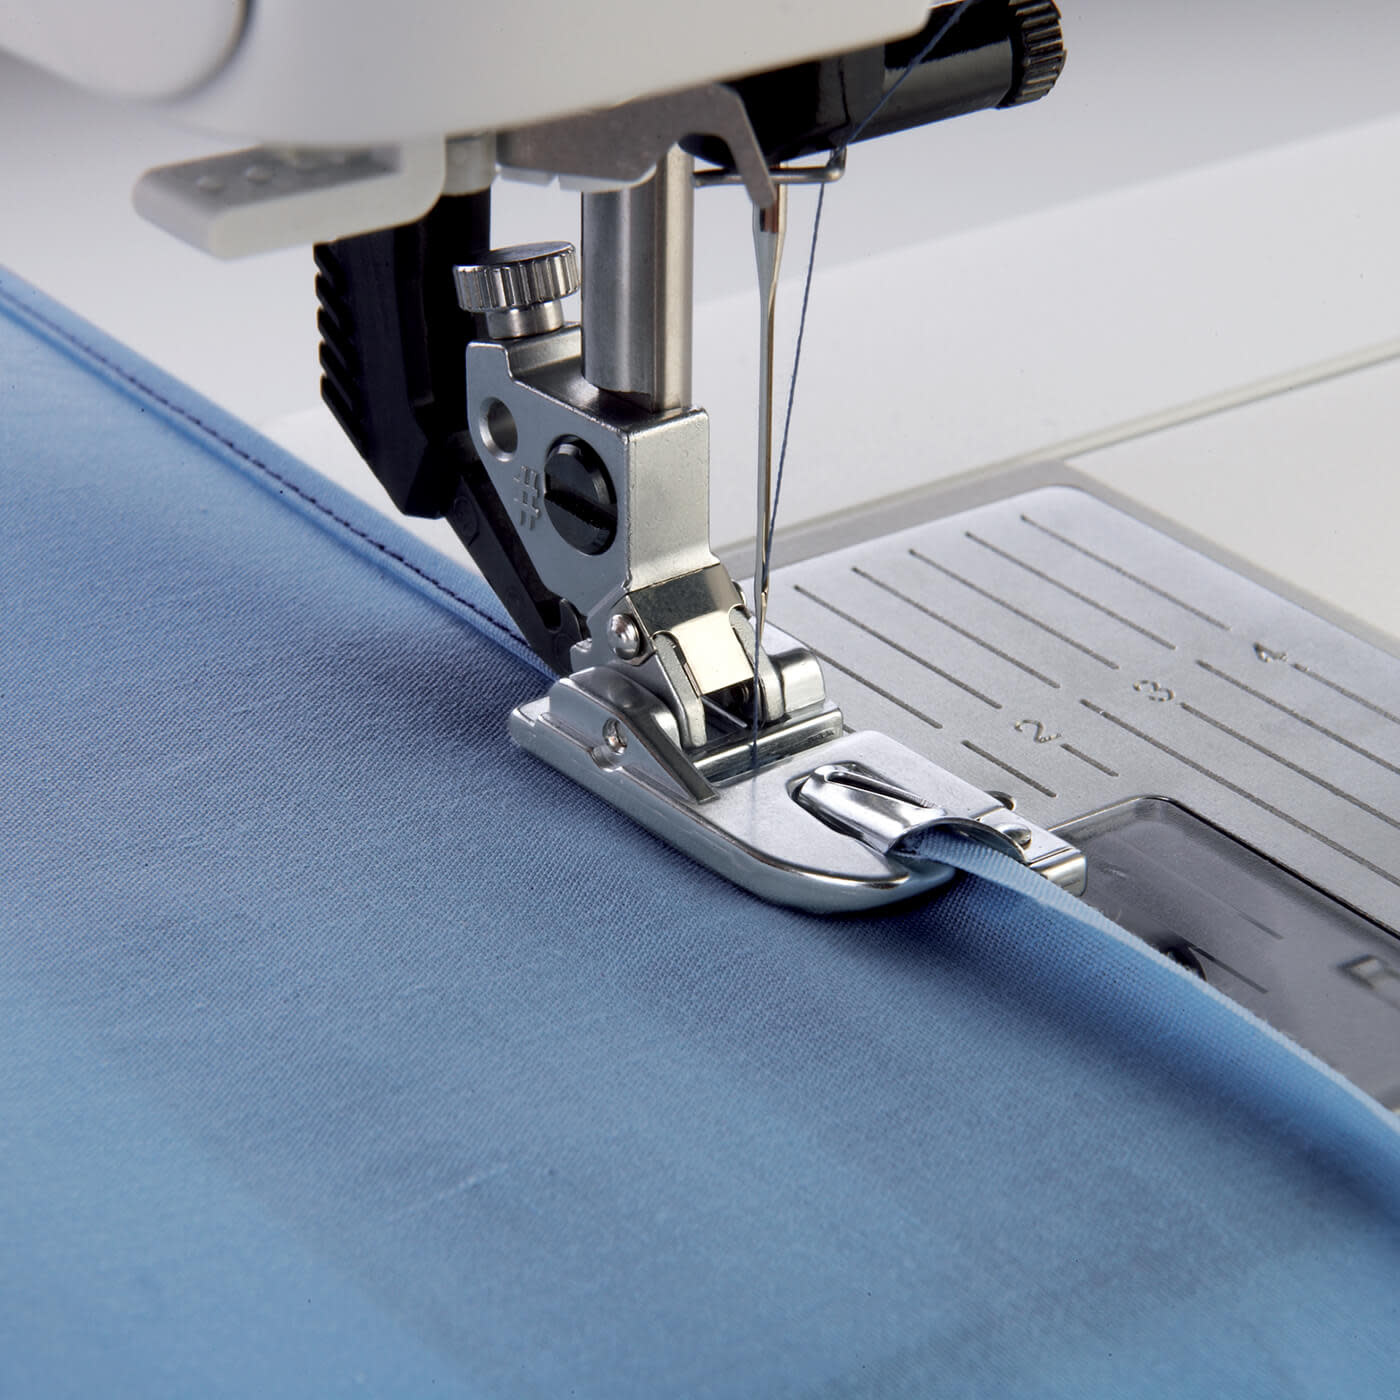 How to sew a neat rolled hem with an overlocker » BERNINA Blog